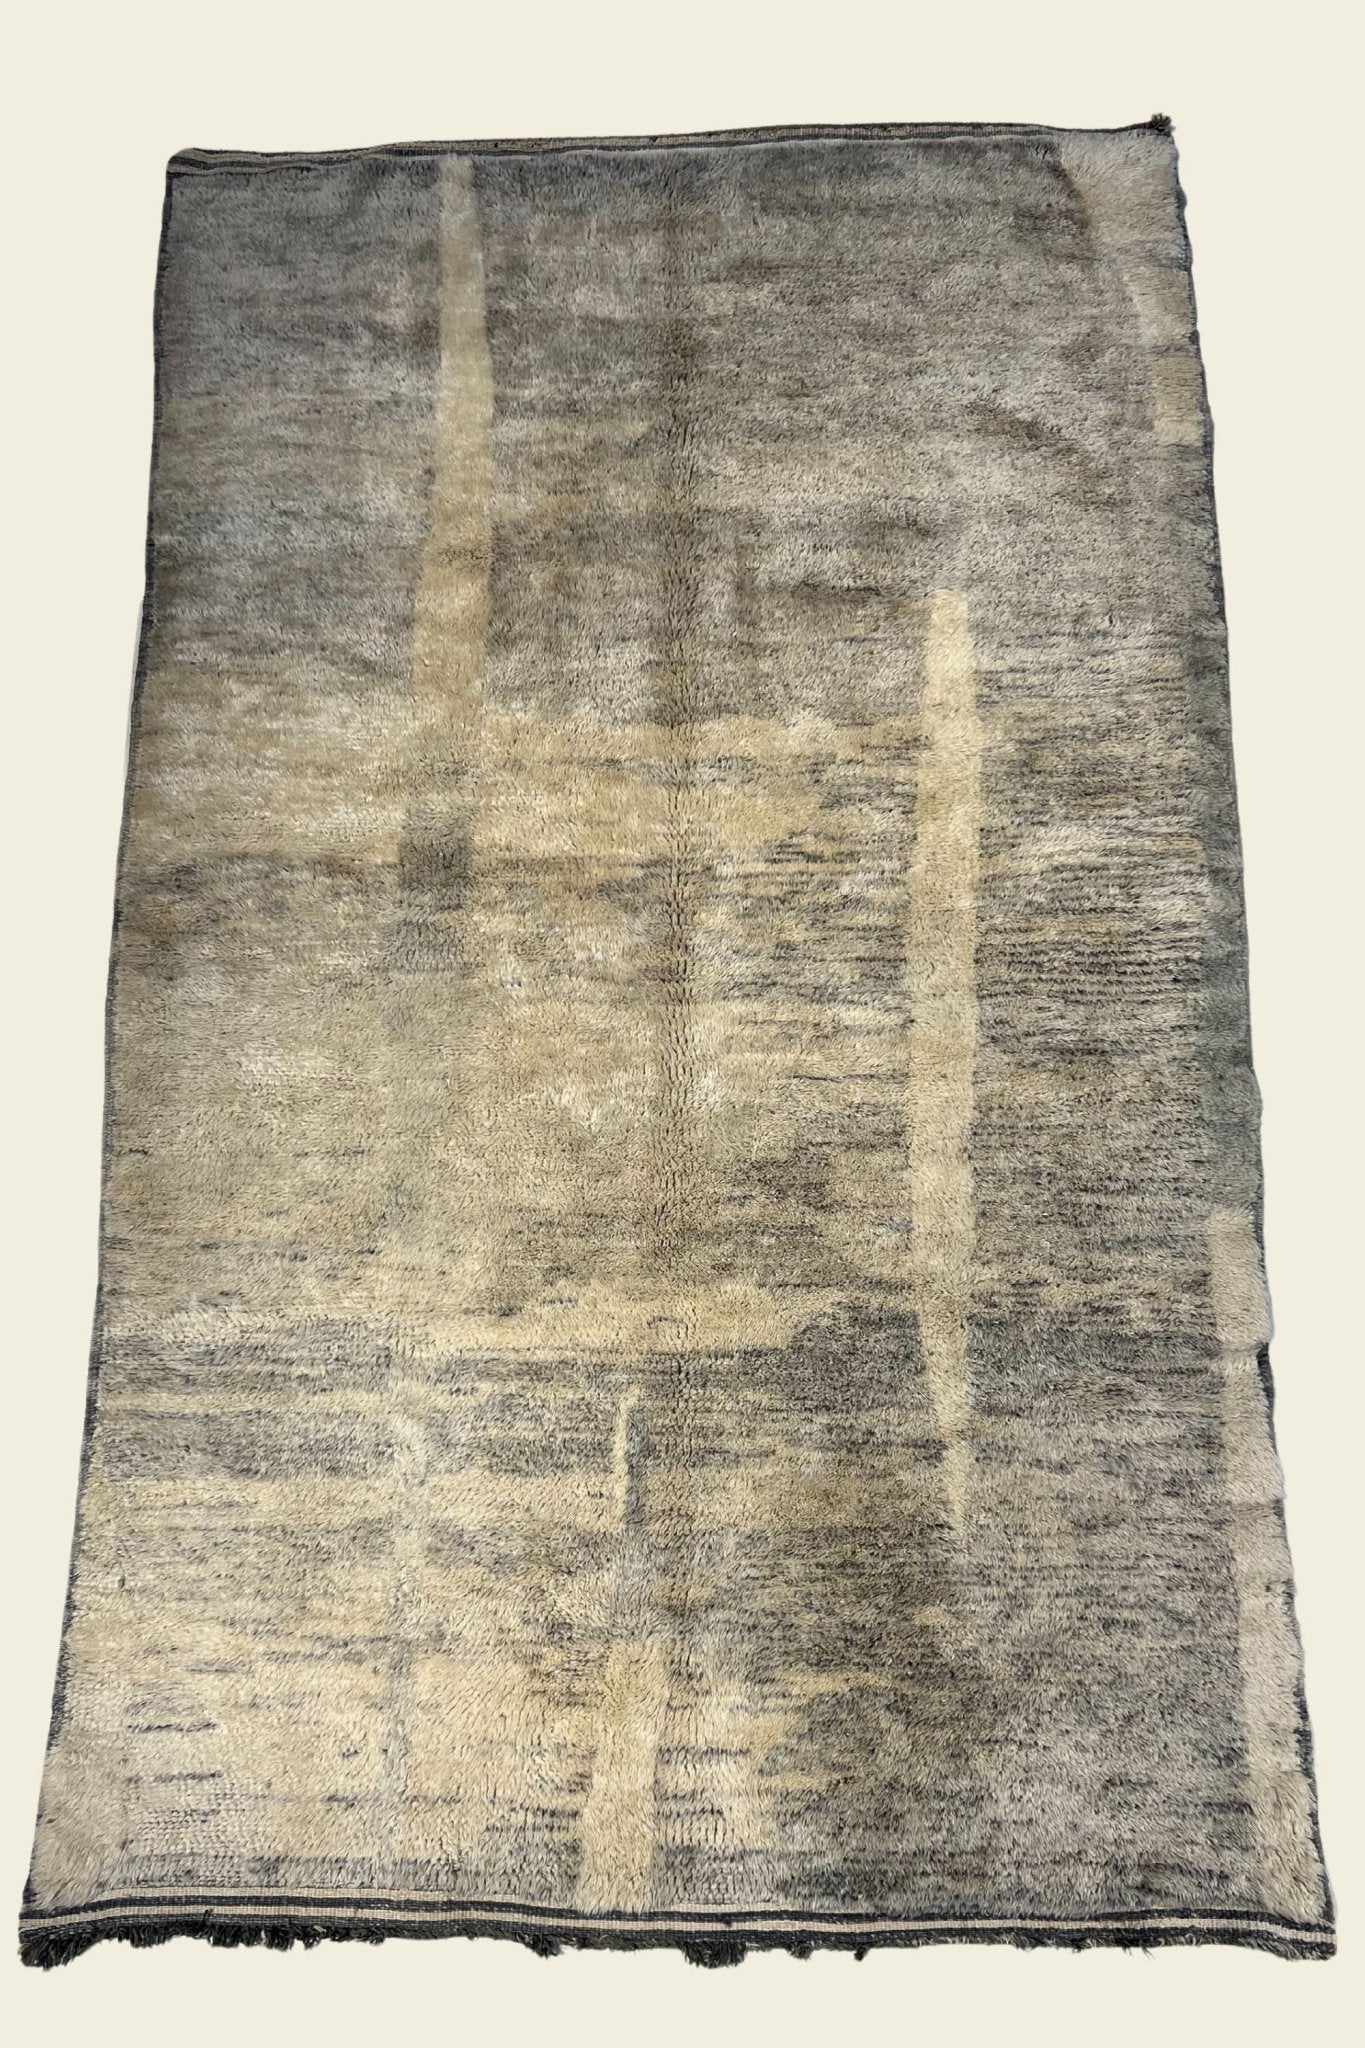 Contemporary Beni Mrirt Berber Rug 5'83" x 9'77" - 178 cm x 298 cm (Wool) - Dar Bouchaib Marrakech